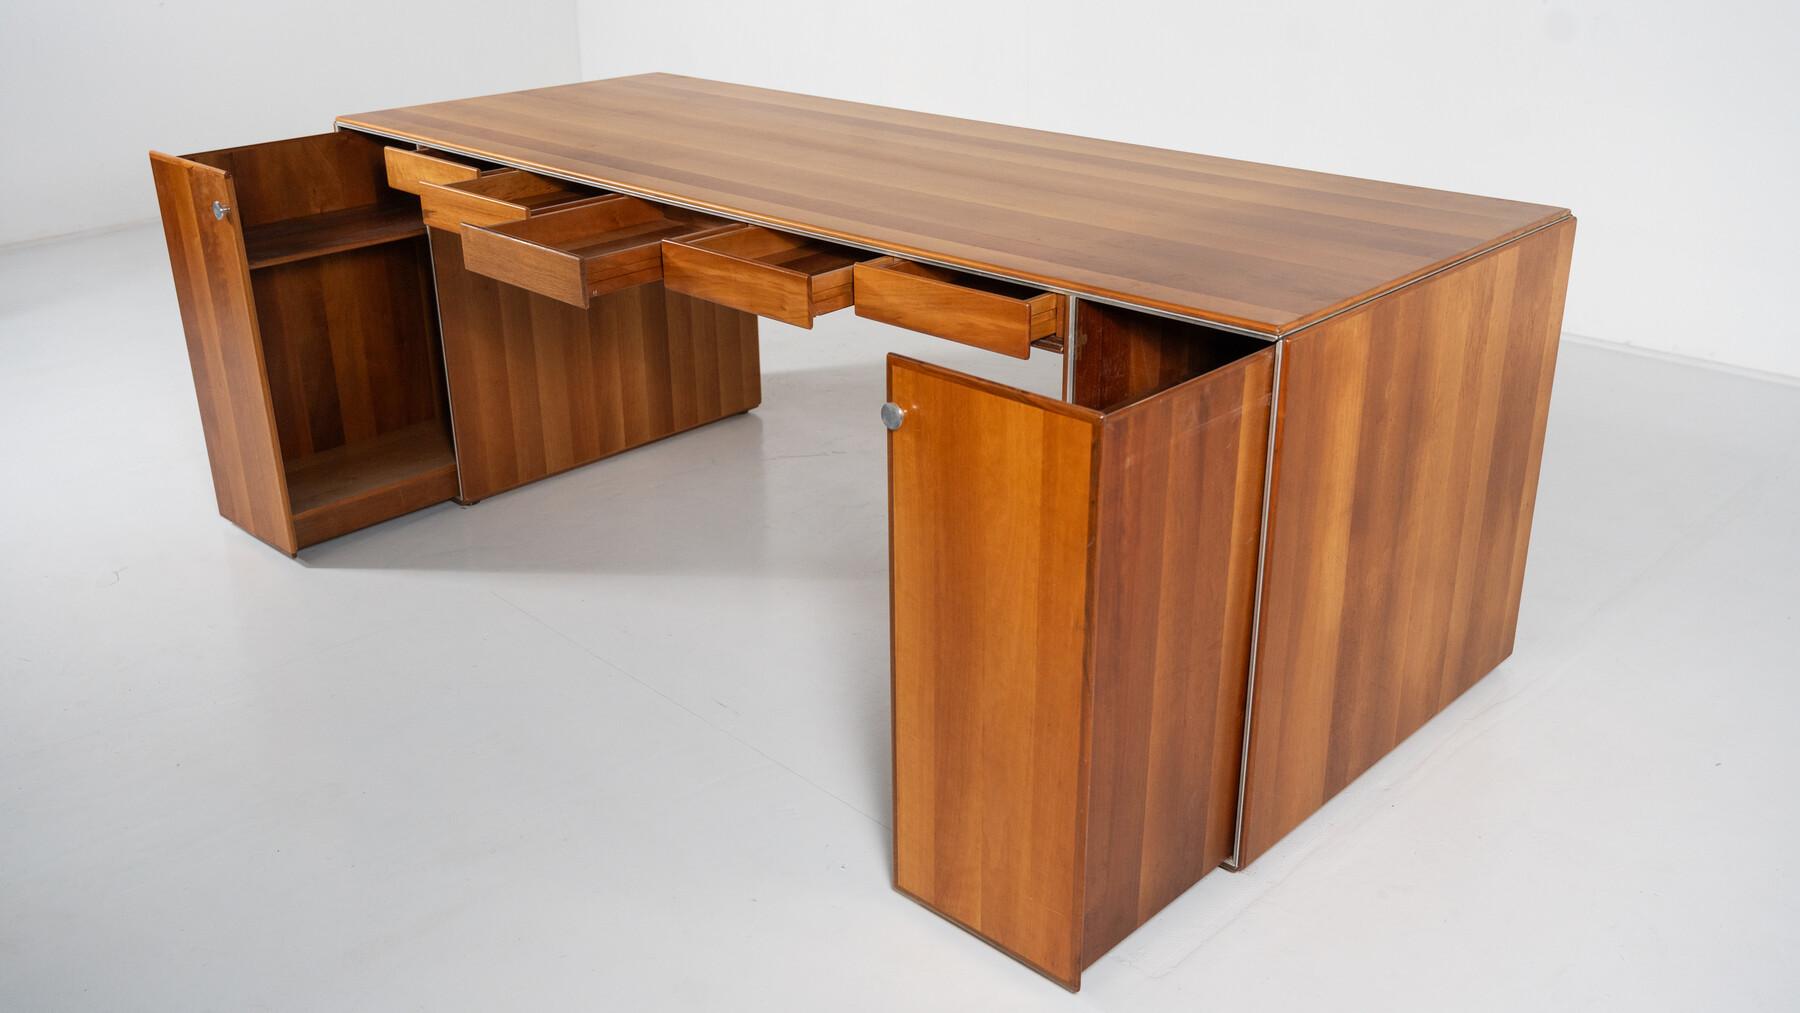 Late 20th Century Mid-Century Modern Desk by Afra and Tobia Scarpa, Stildomus 1970s